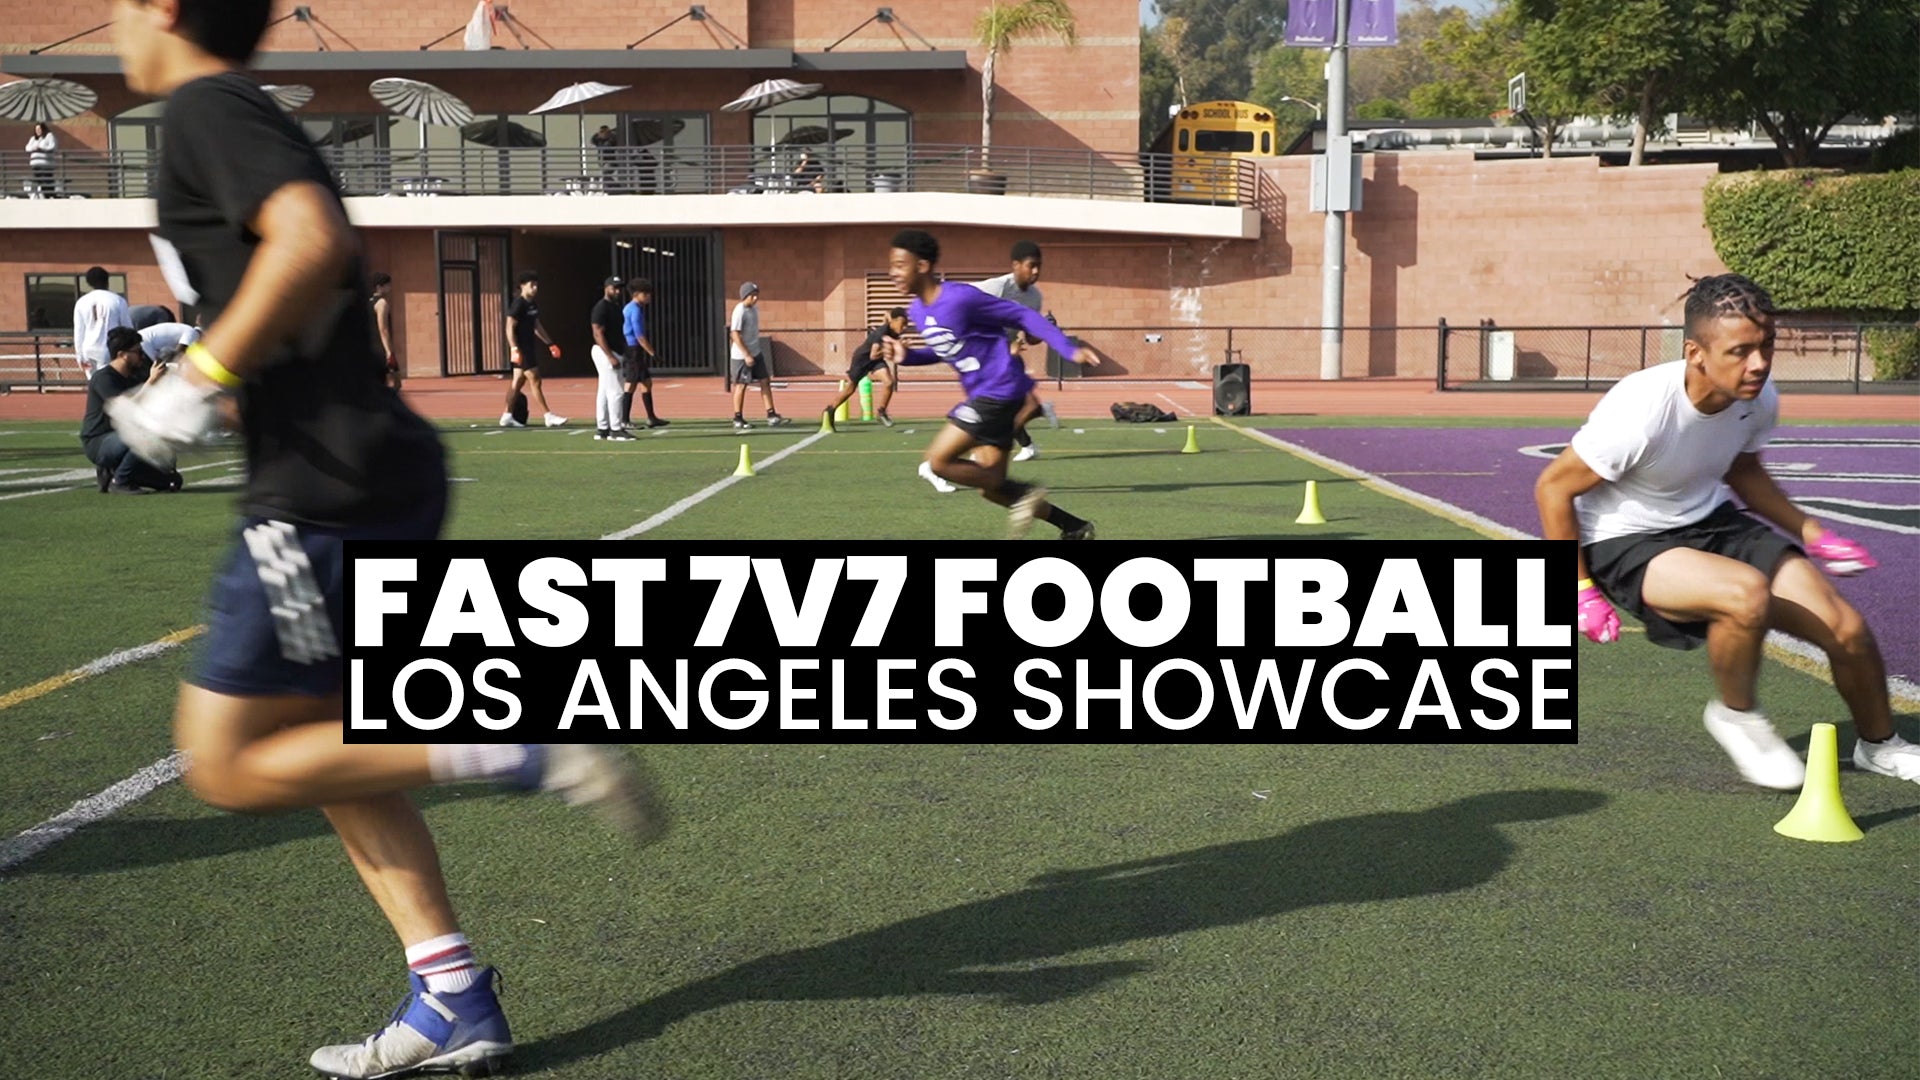 Fast 7v7 Football LA Showcase